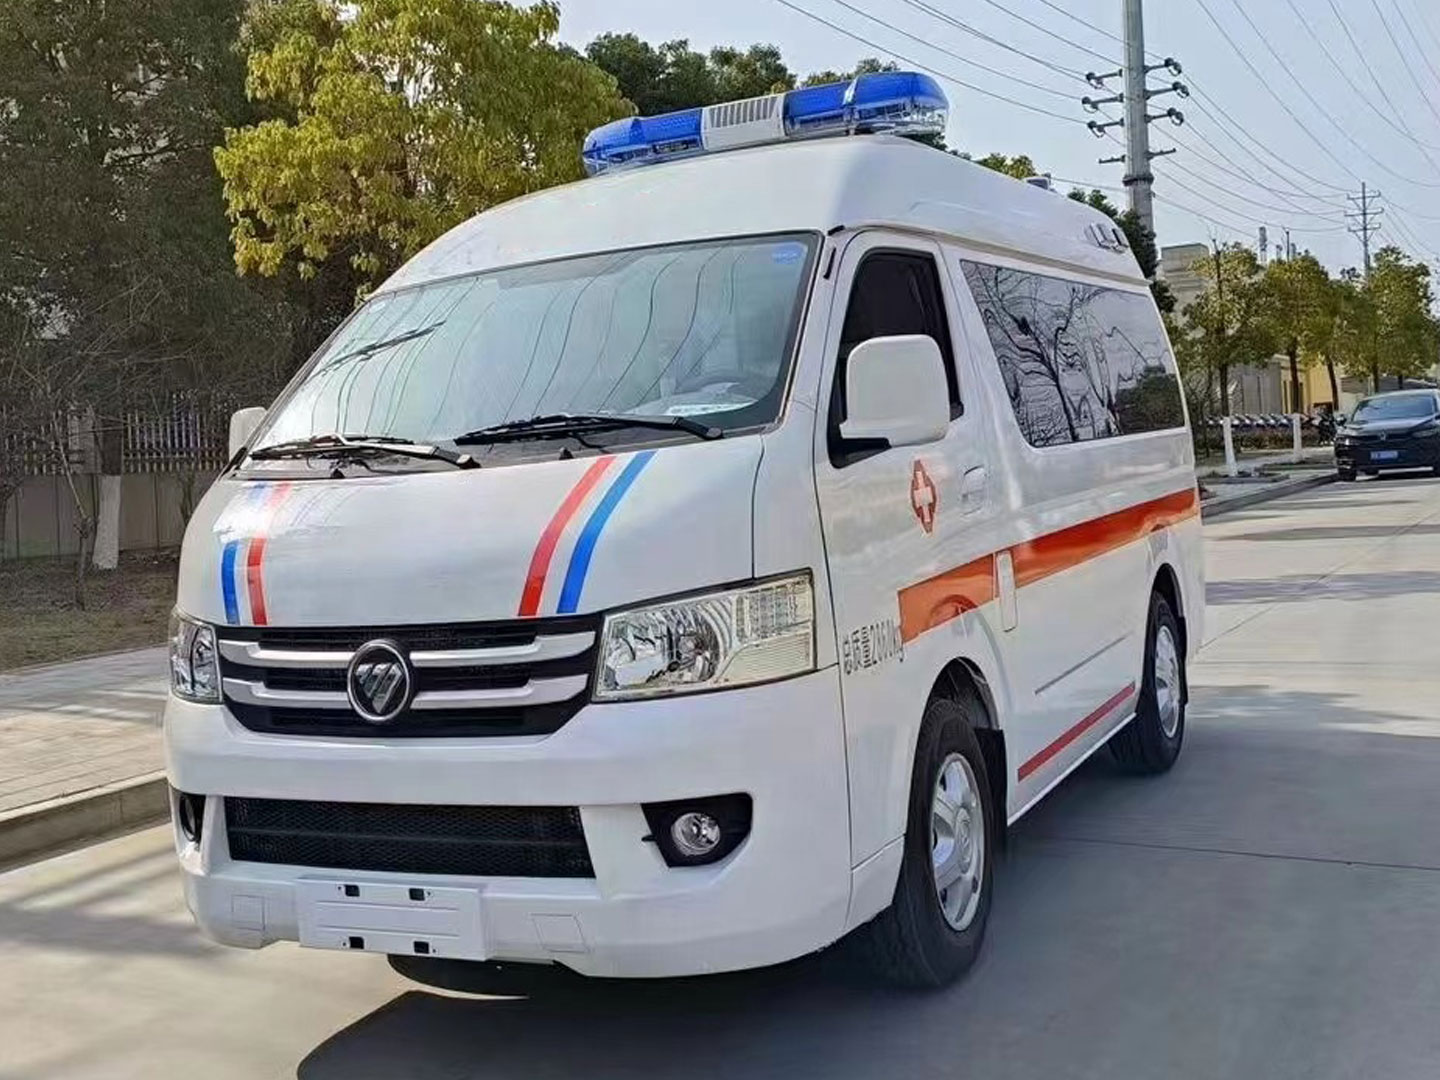 Equipo de ambulancia FOTON G7 Ven Tilator Nuevo coche de ambulancia médica